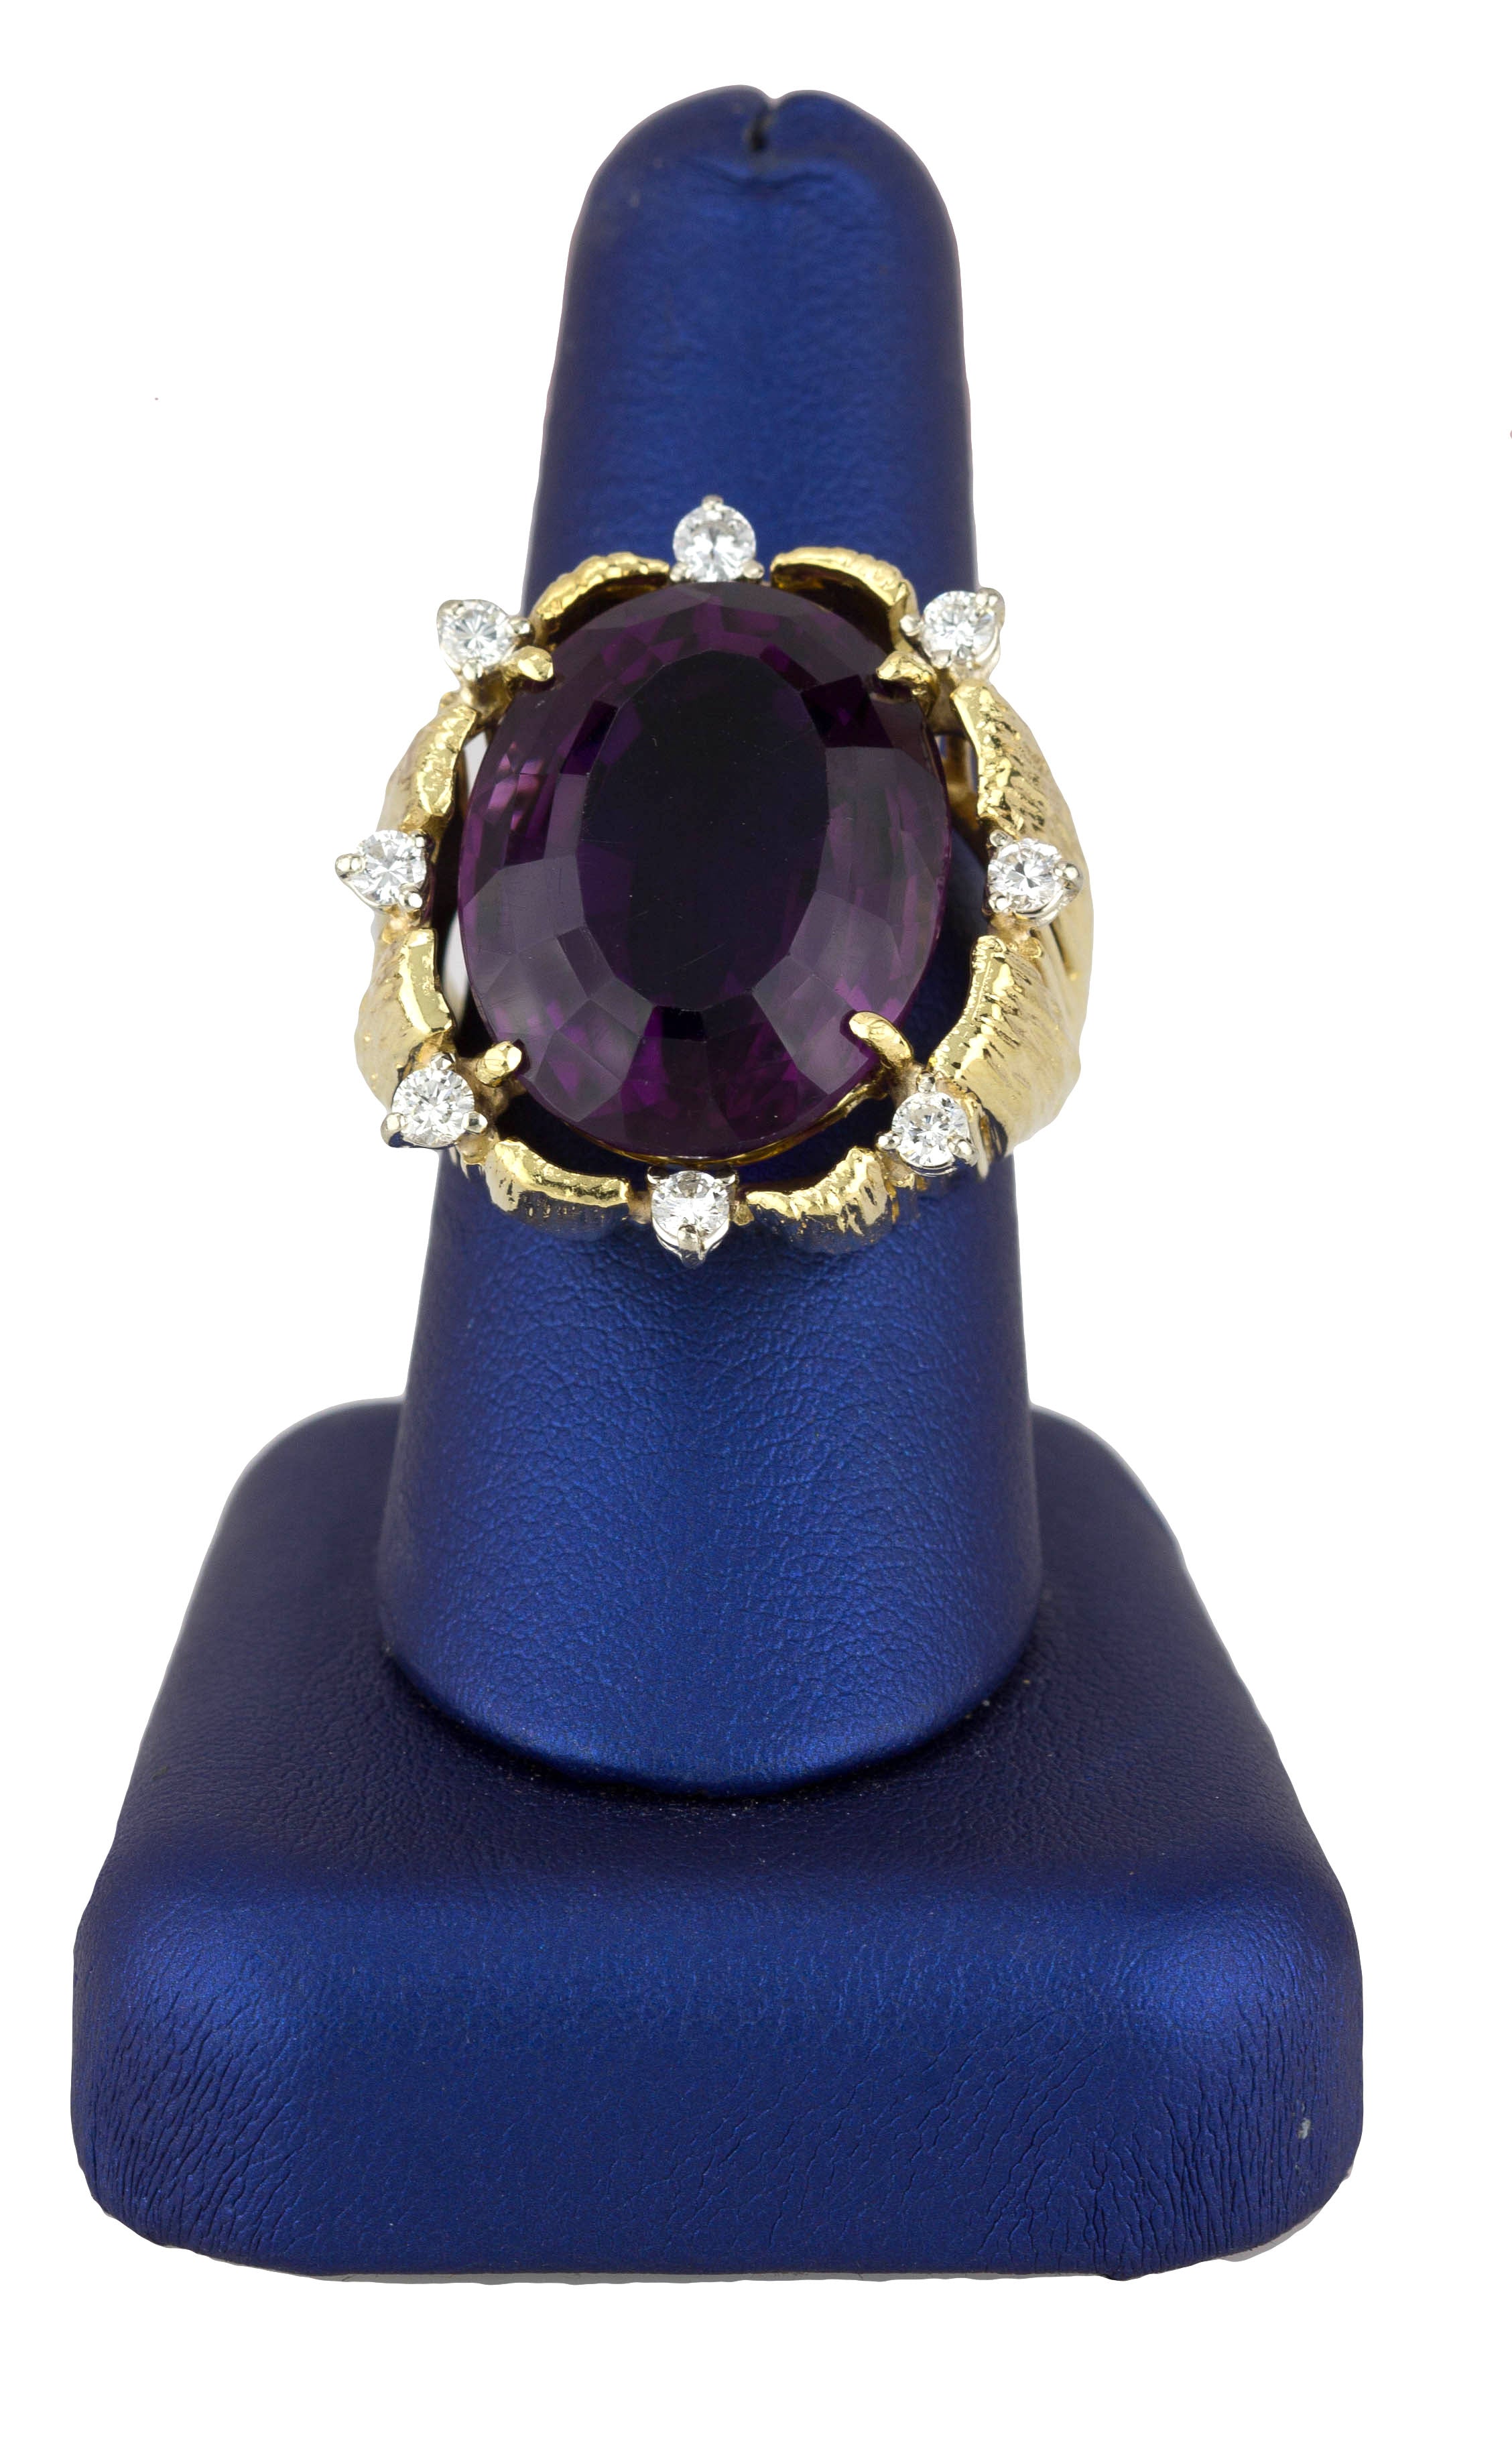 Women's Modernist 18K Yellow Gold 22x17mm Oval Amethyst Diamond Cocktail Ring